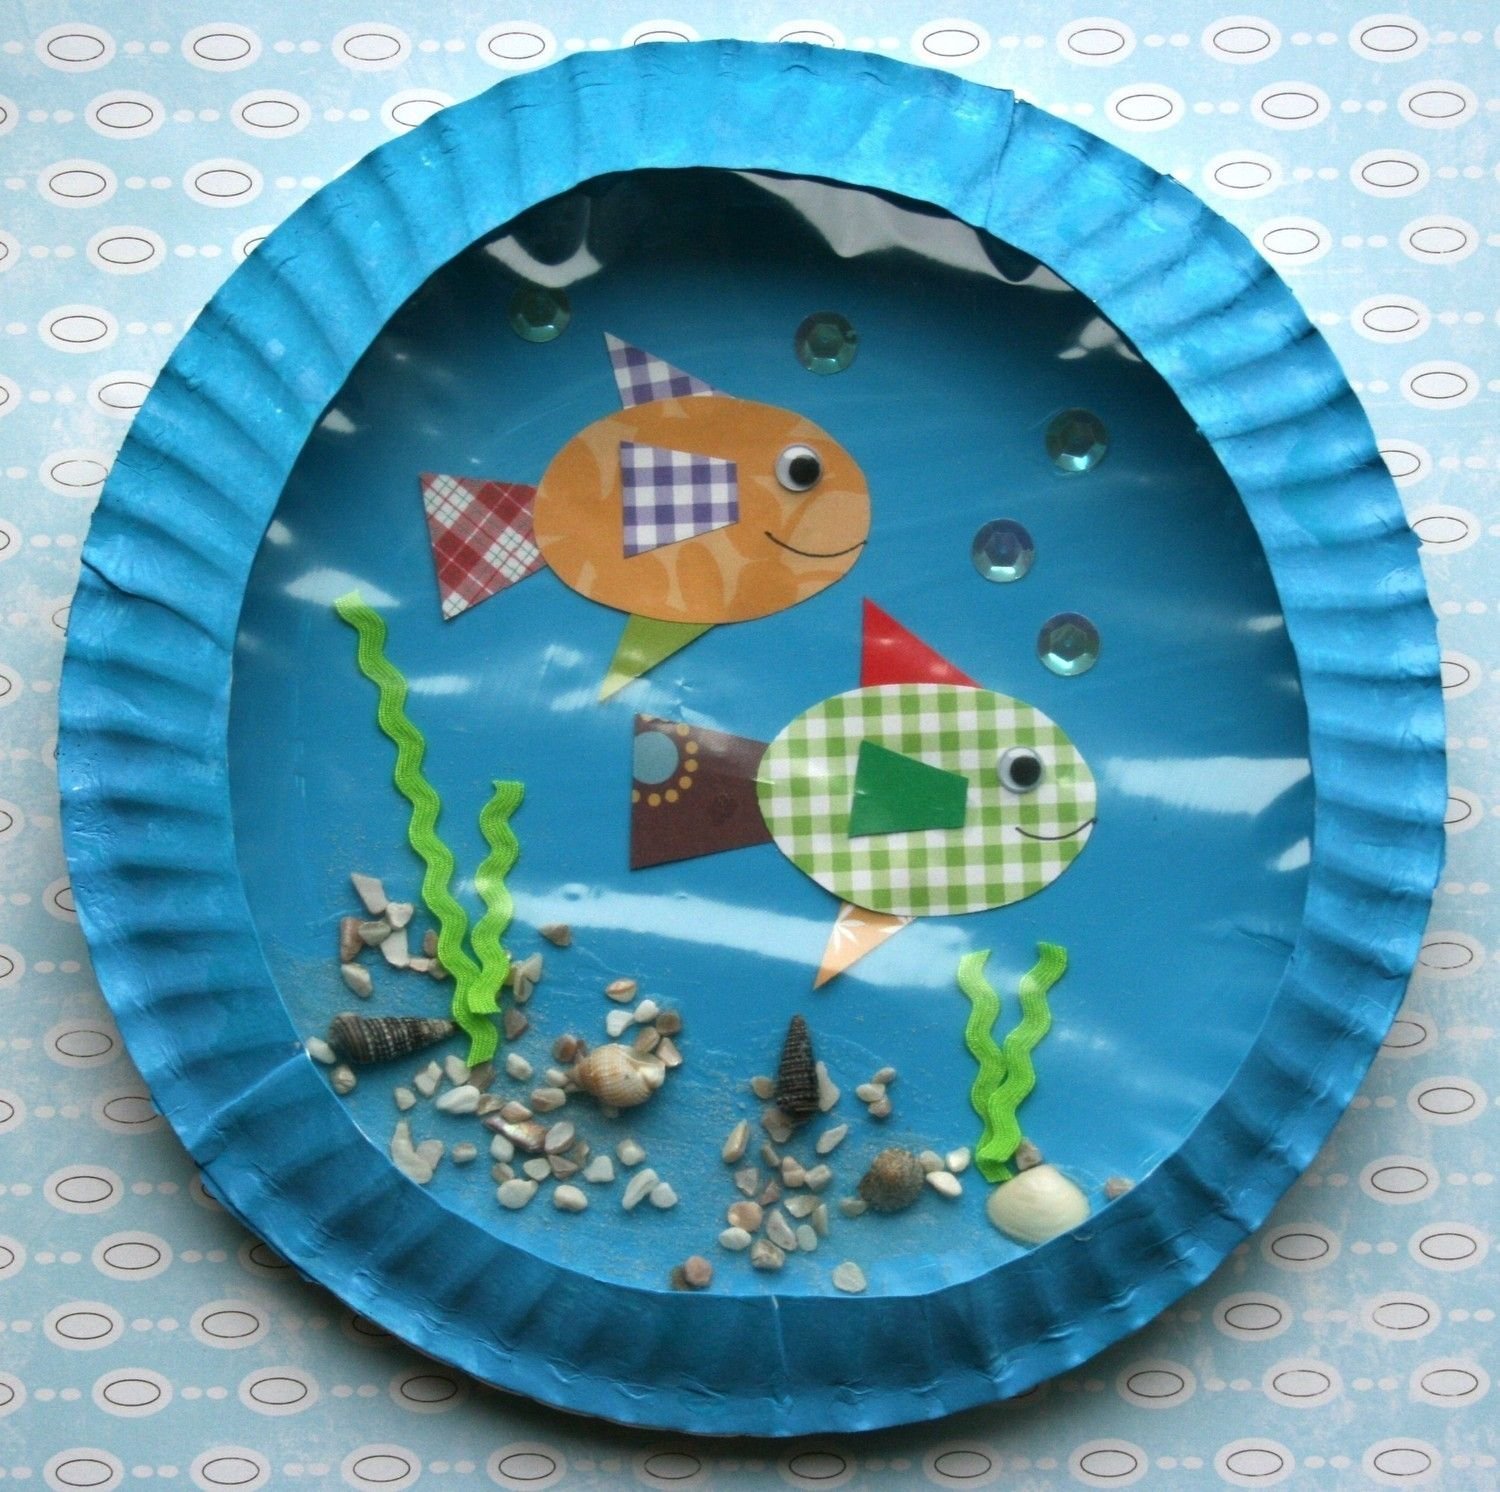 Рыбка из бумаги аквариум. Поделка аквариум. Поделка рыбка. Аквариум из бумажной тарелки. Поделки на бумажных тарелках.